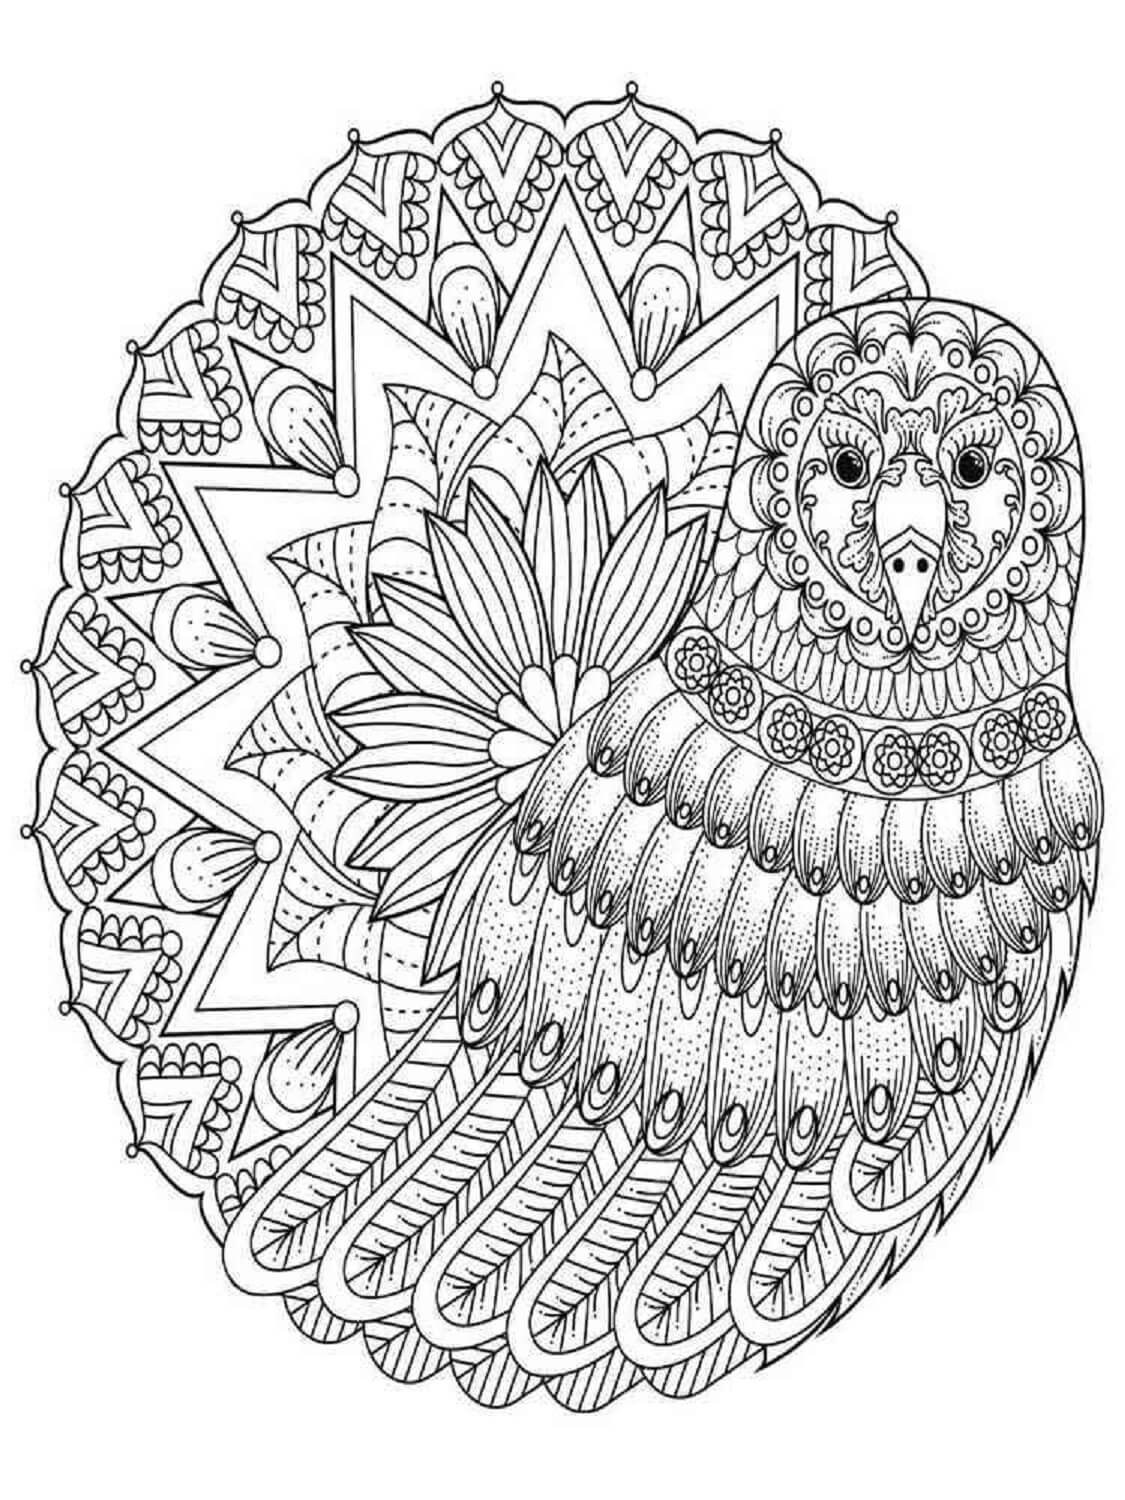 Mandala Bird Coloring Page - Sheet 6 Mandalas